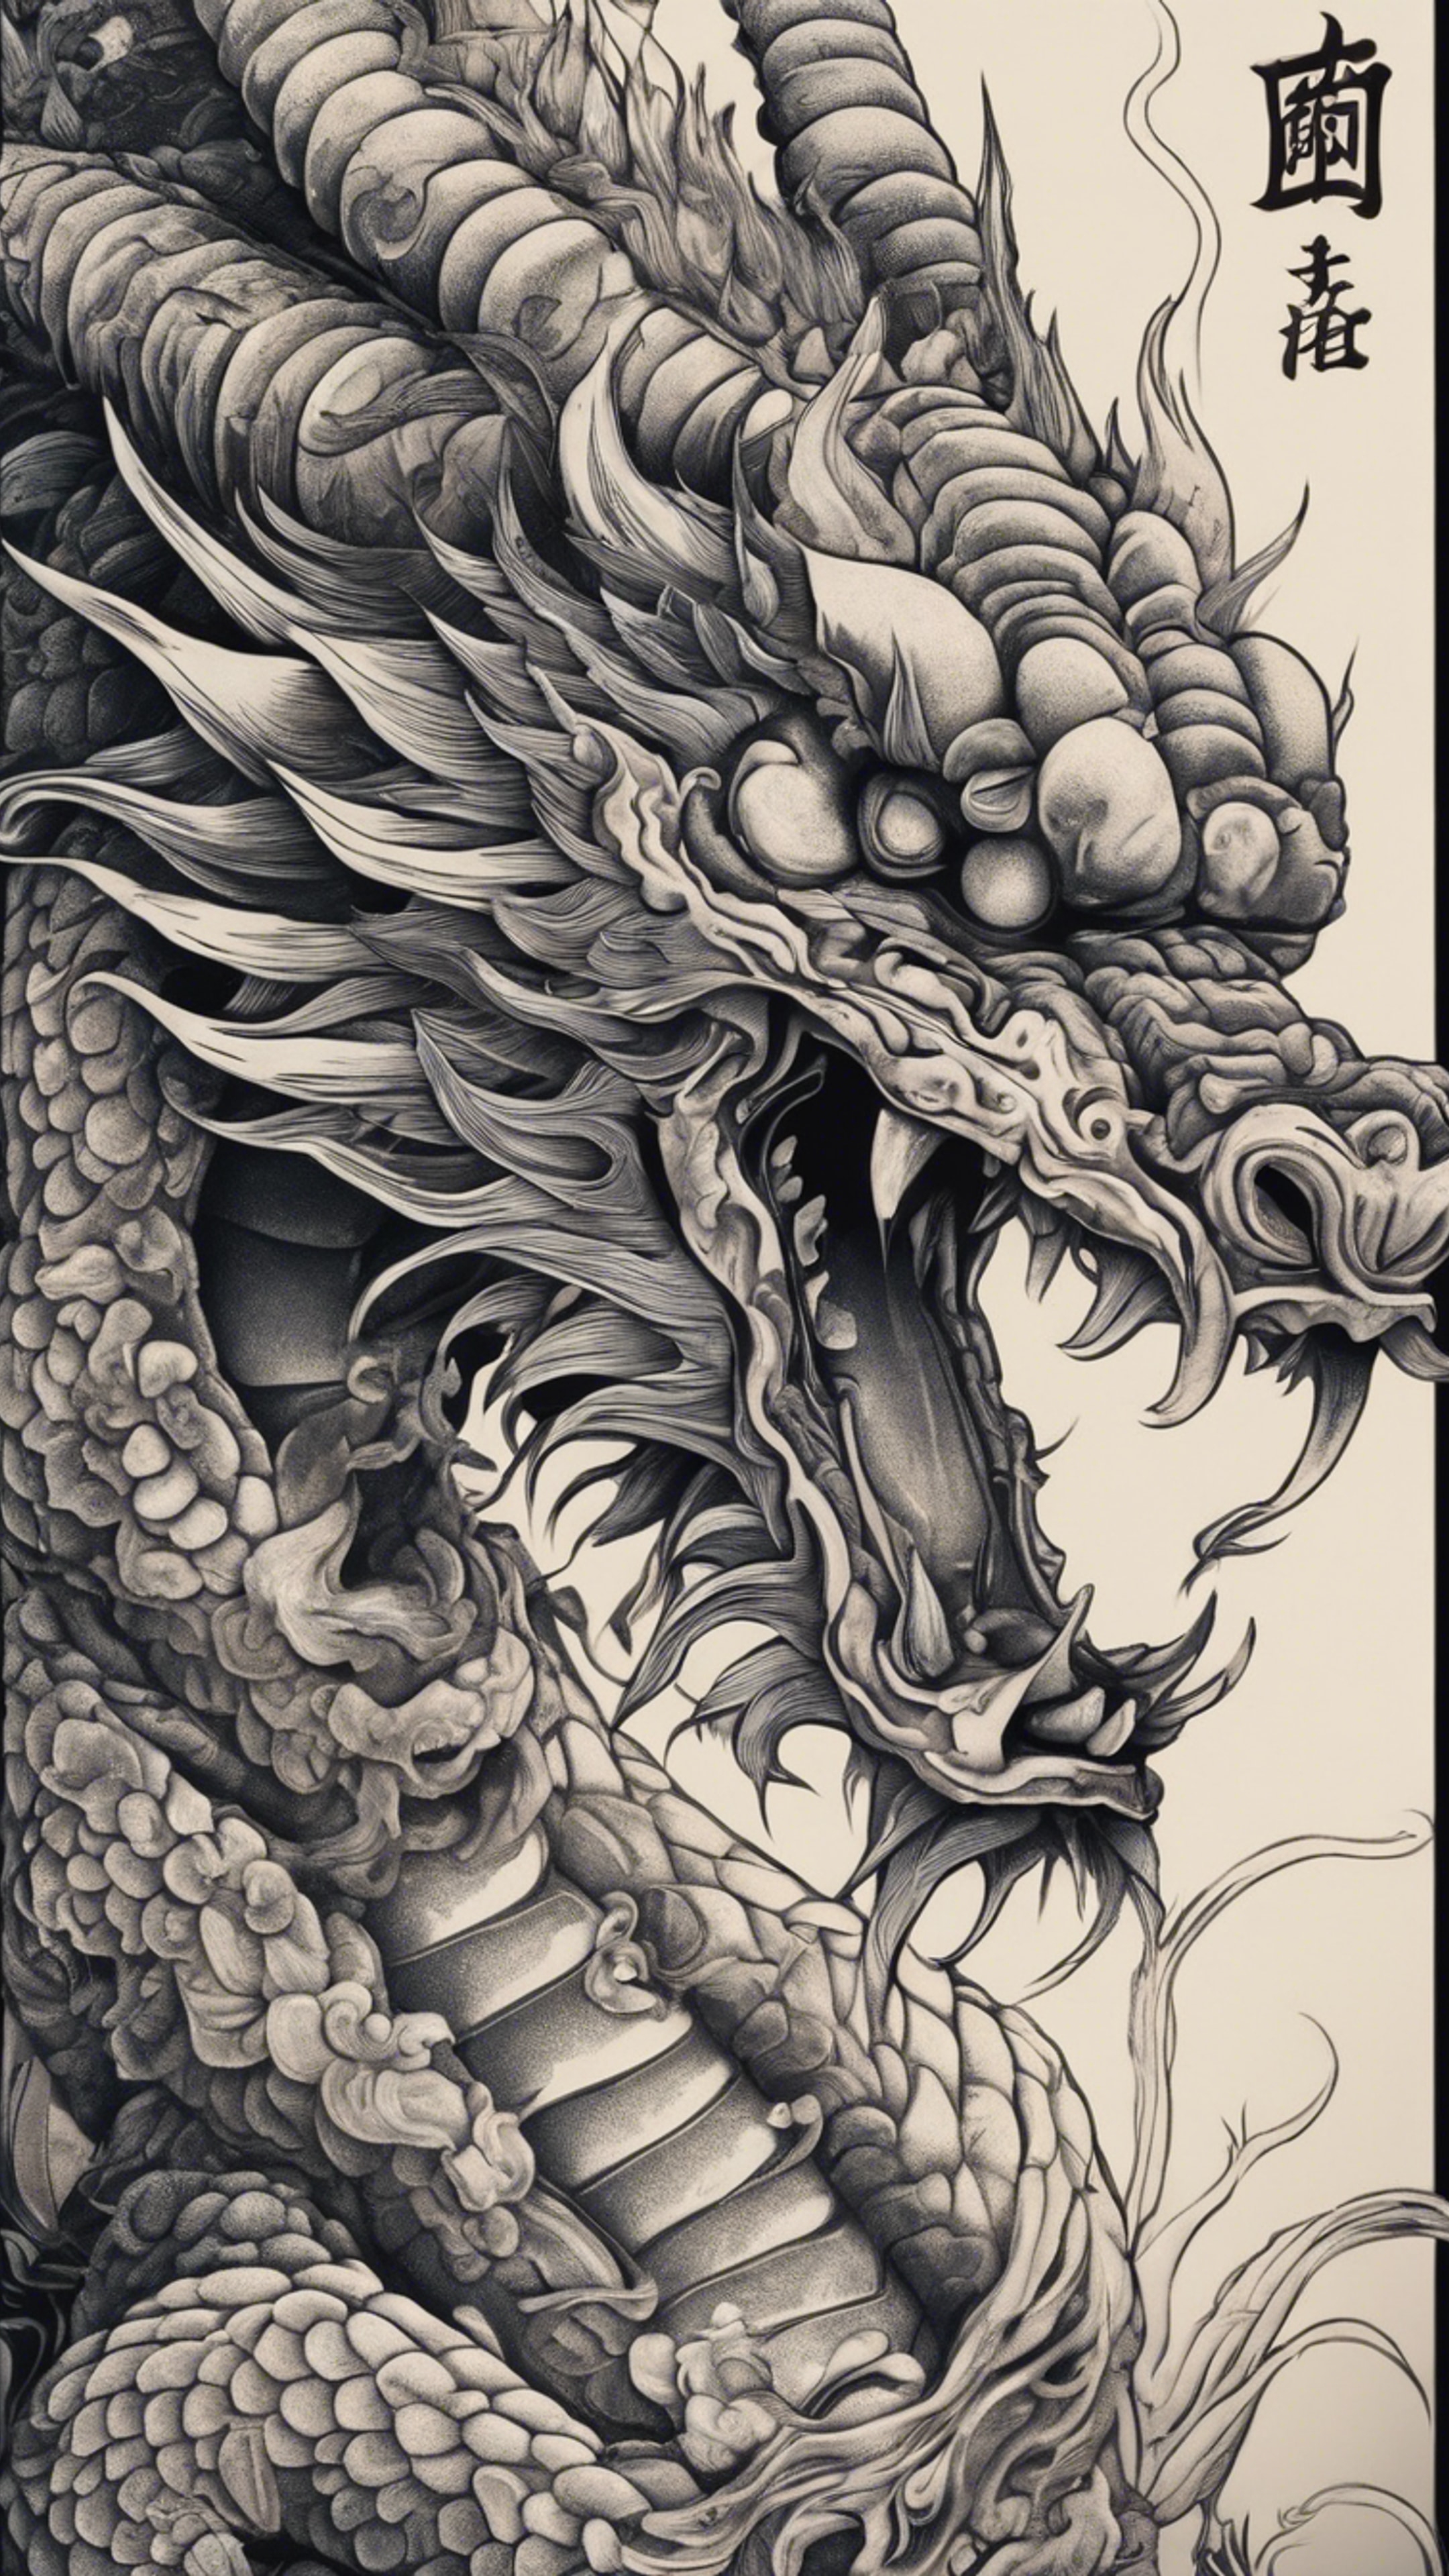 A Japanese dragon tattoo design with intricate details. Tapet[fa4ff1f2e6c24a2f94e4]